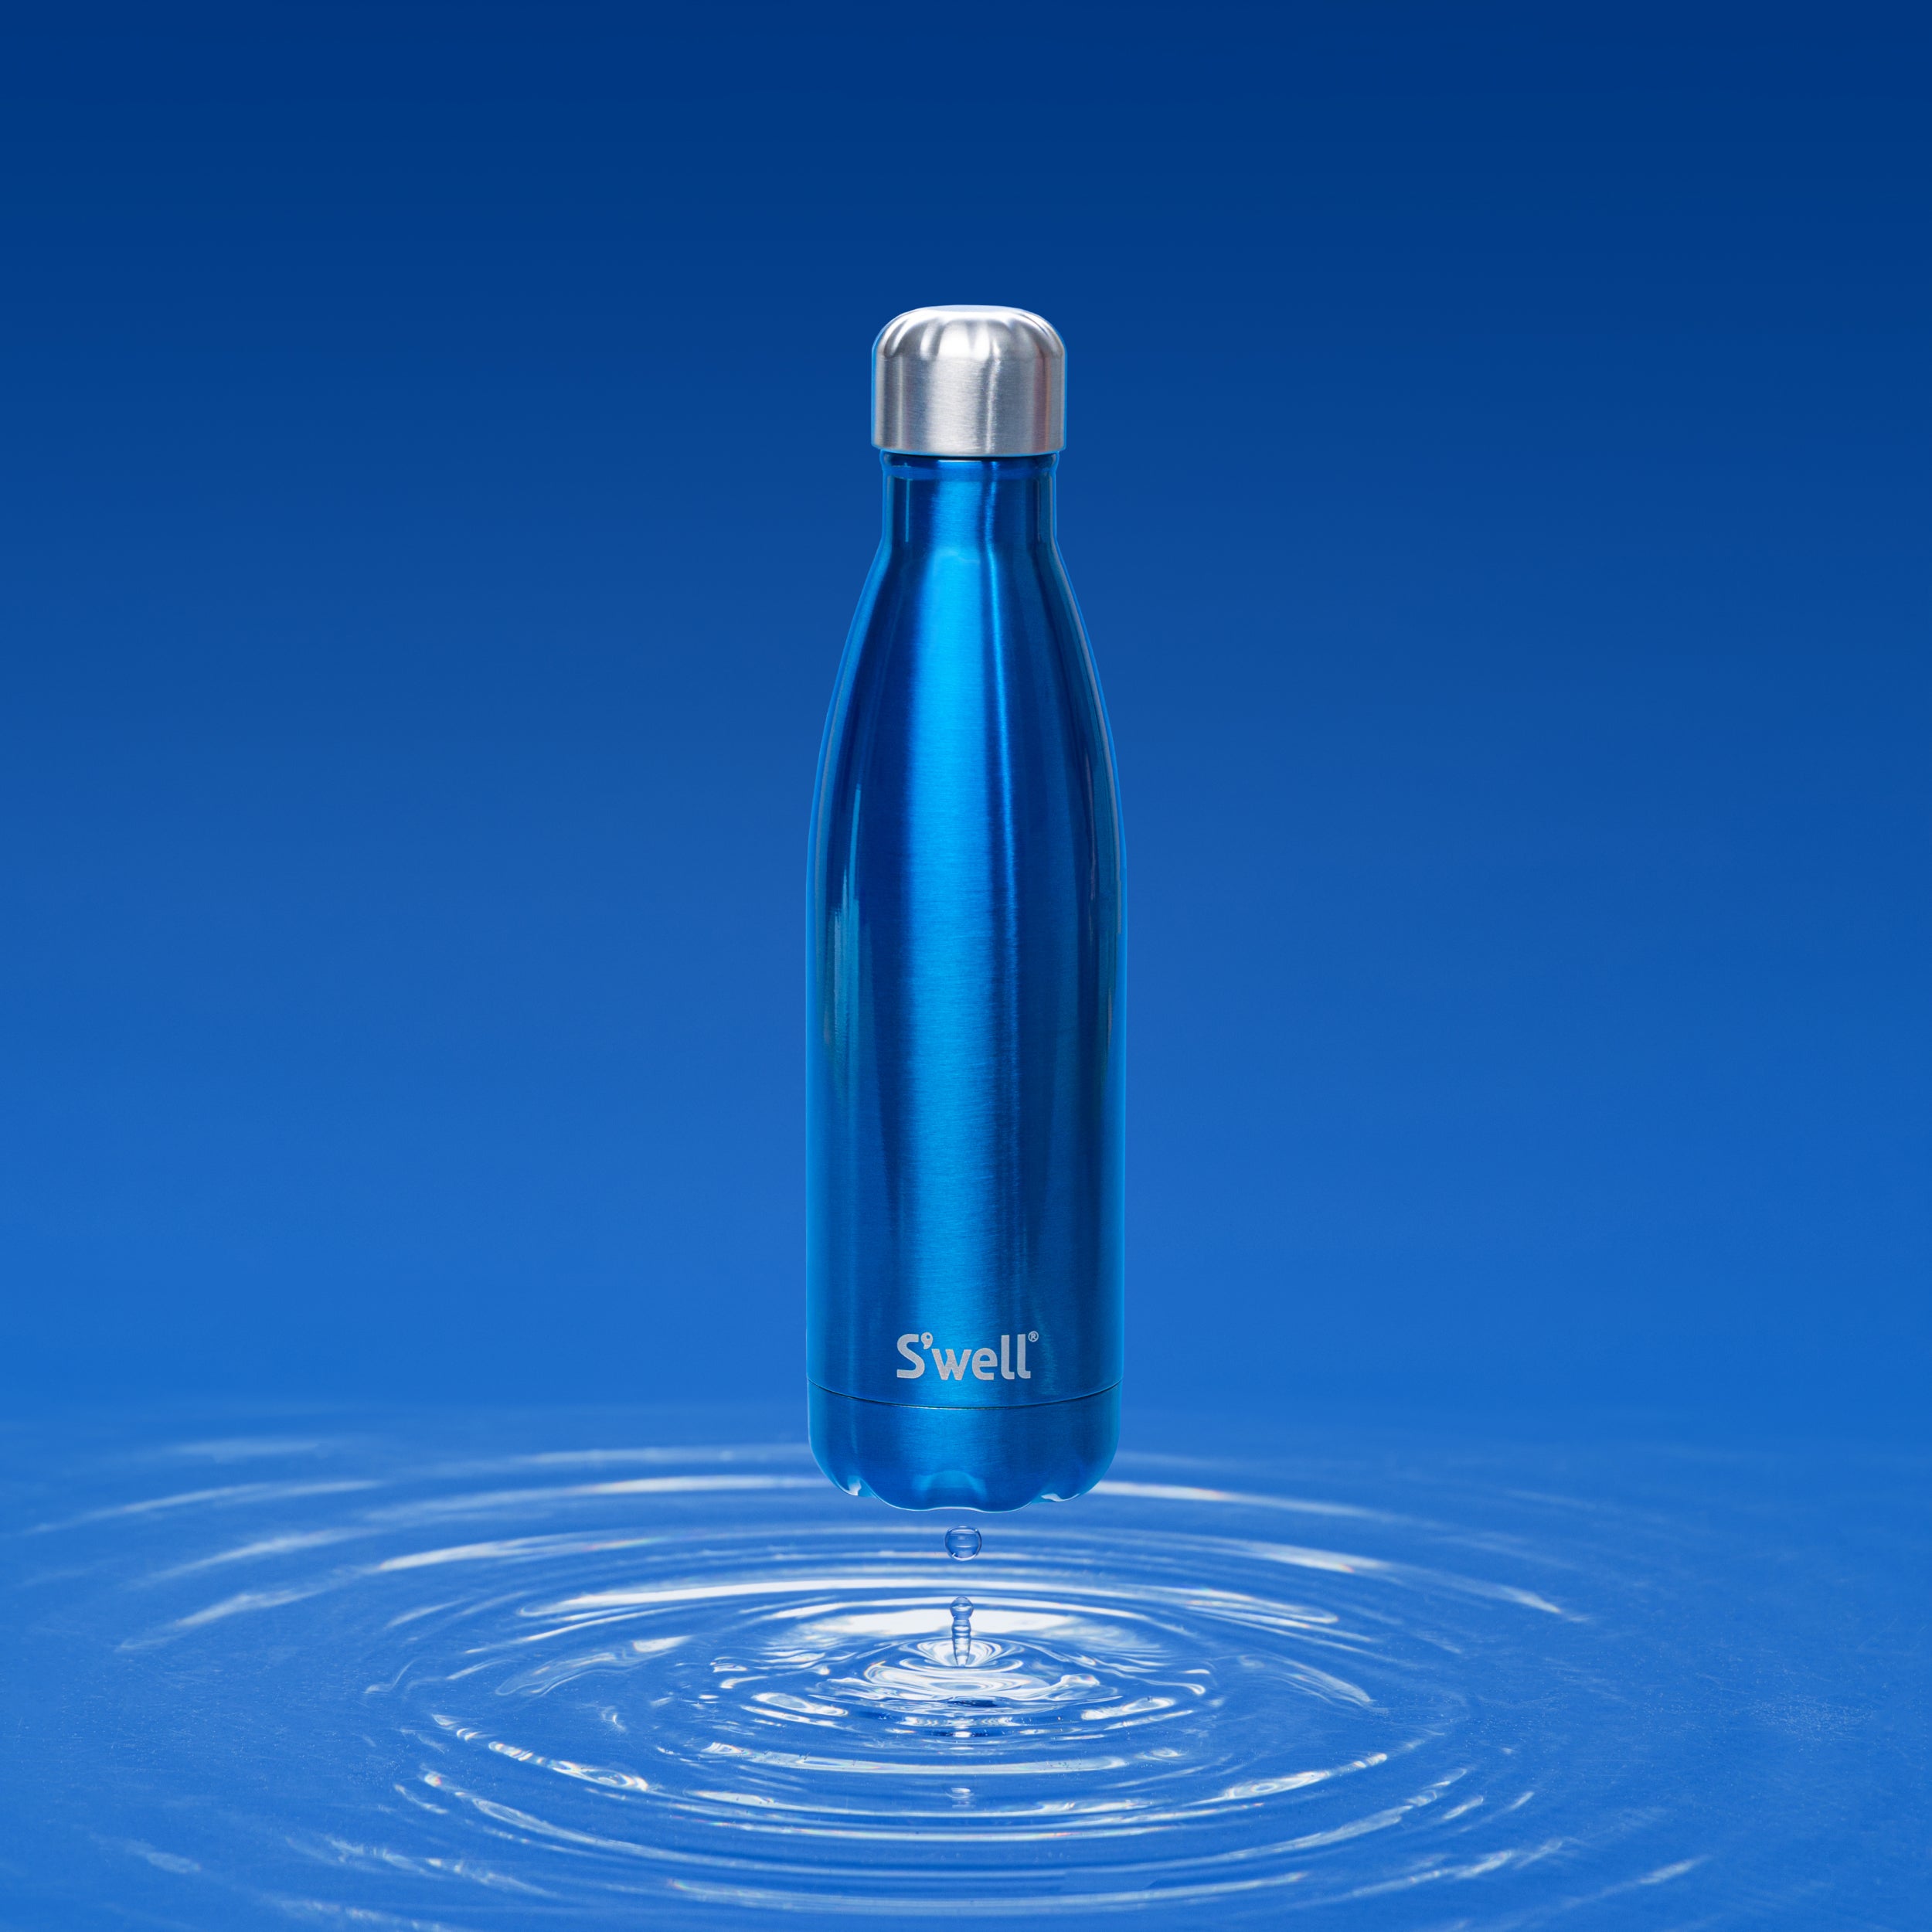 The 9 Best Stainless Steel Water Bottles - Center for Environmental Health